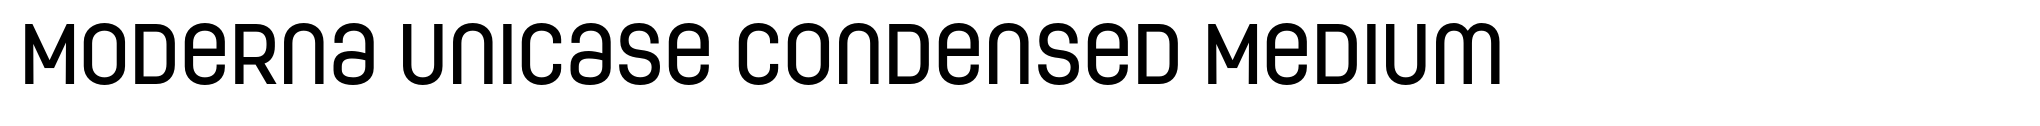 Moderna Unicase Condensed Medium image